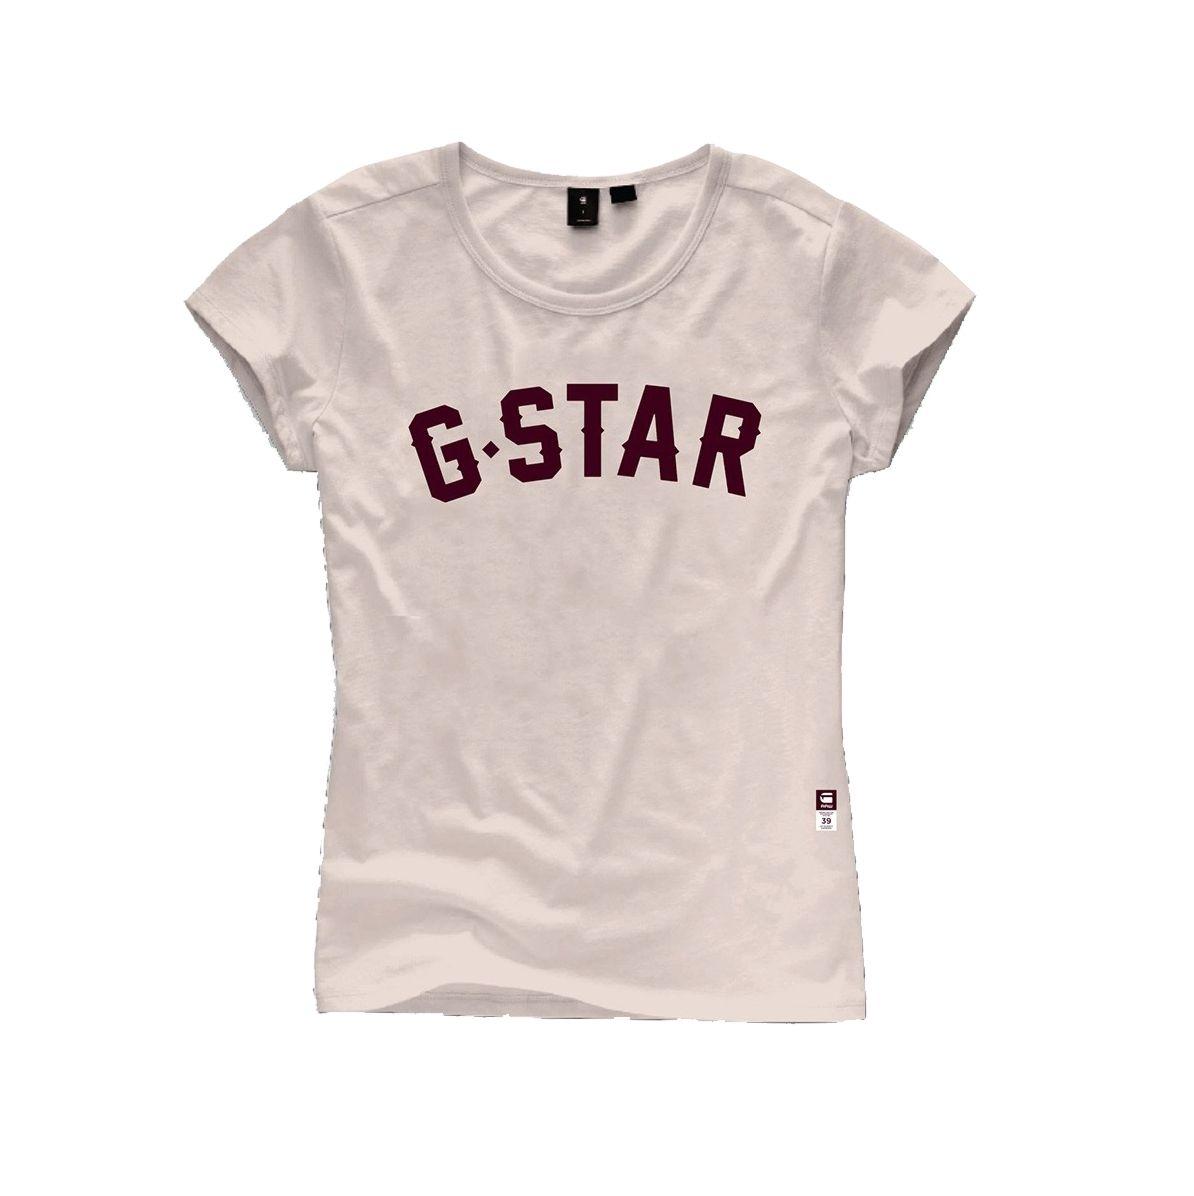 Star and White R Logo - G-Star Raw Womens 15 R Logo s/s T-Shirt, PYG Pink